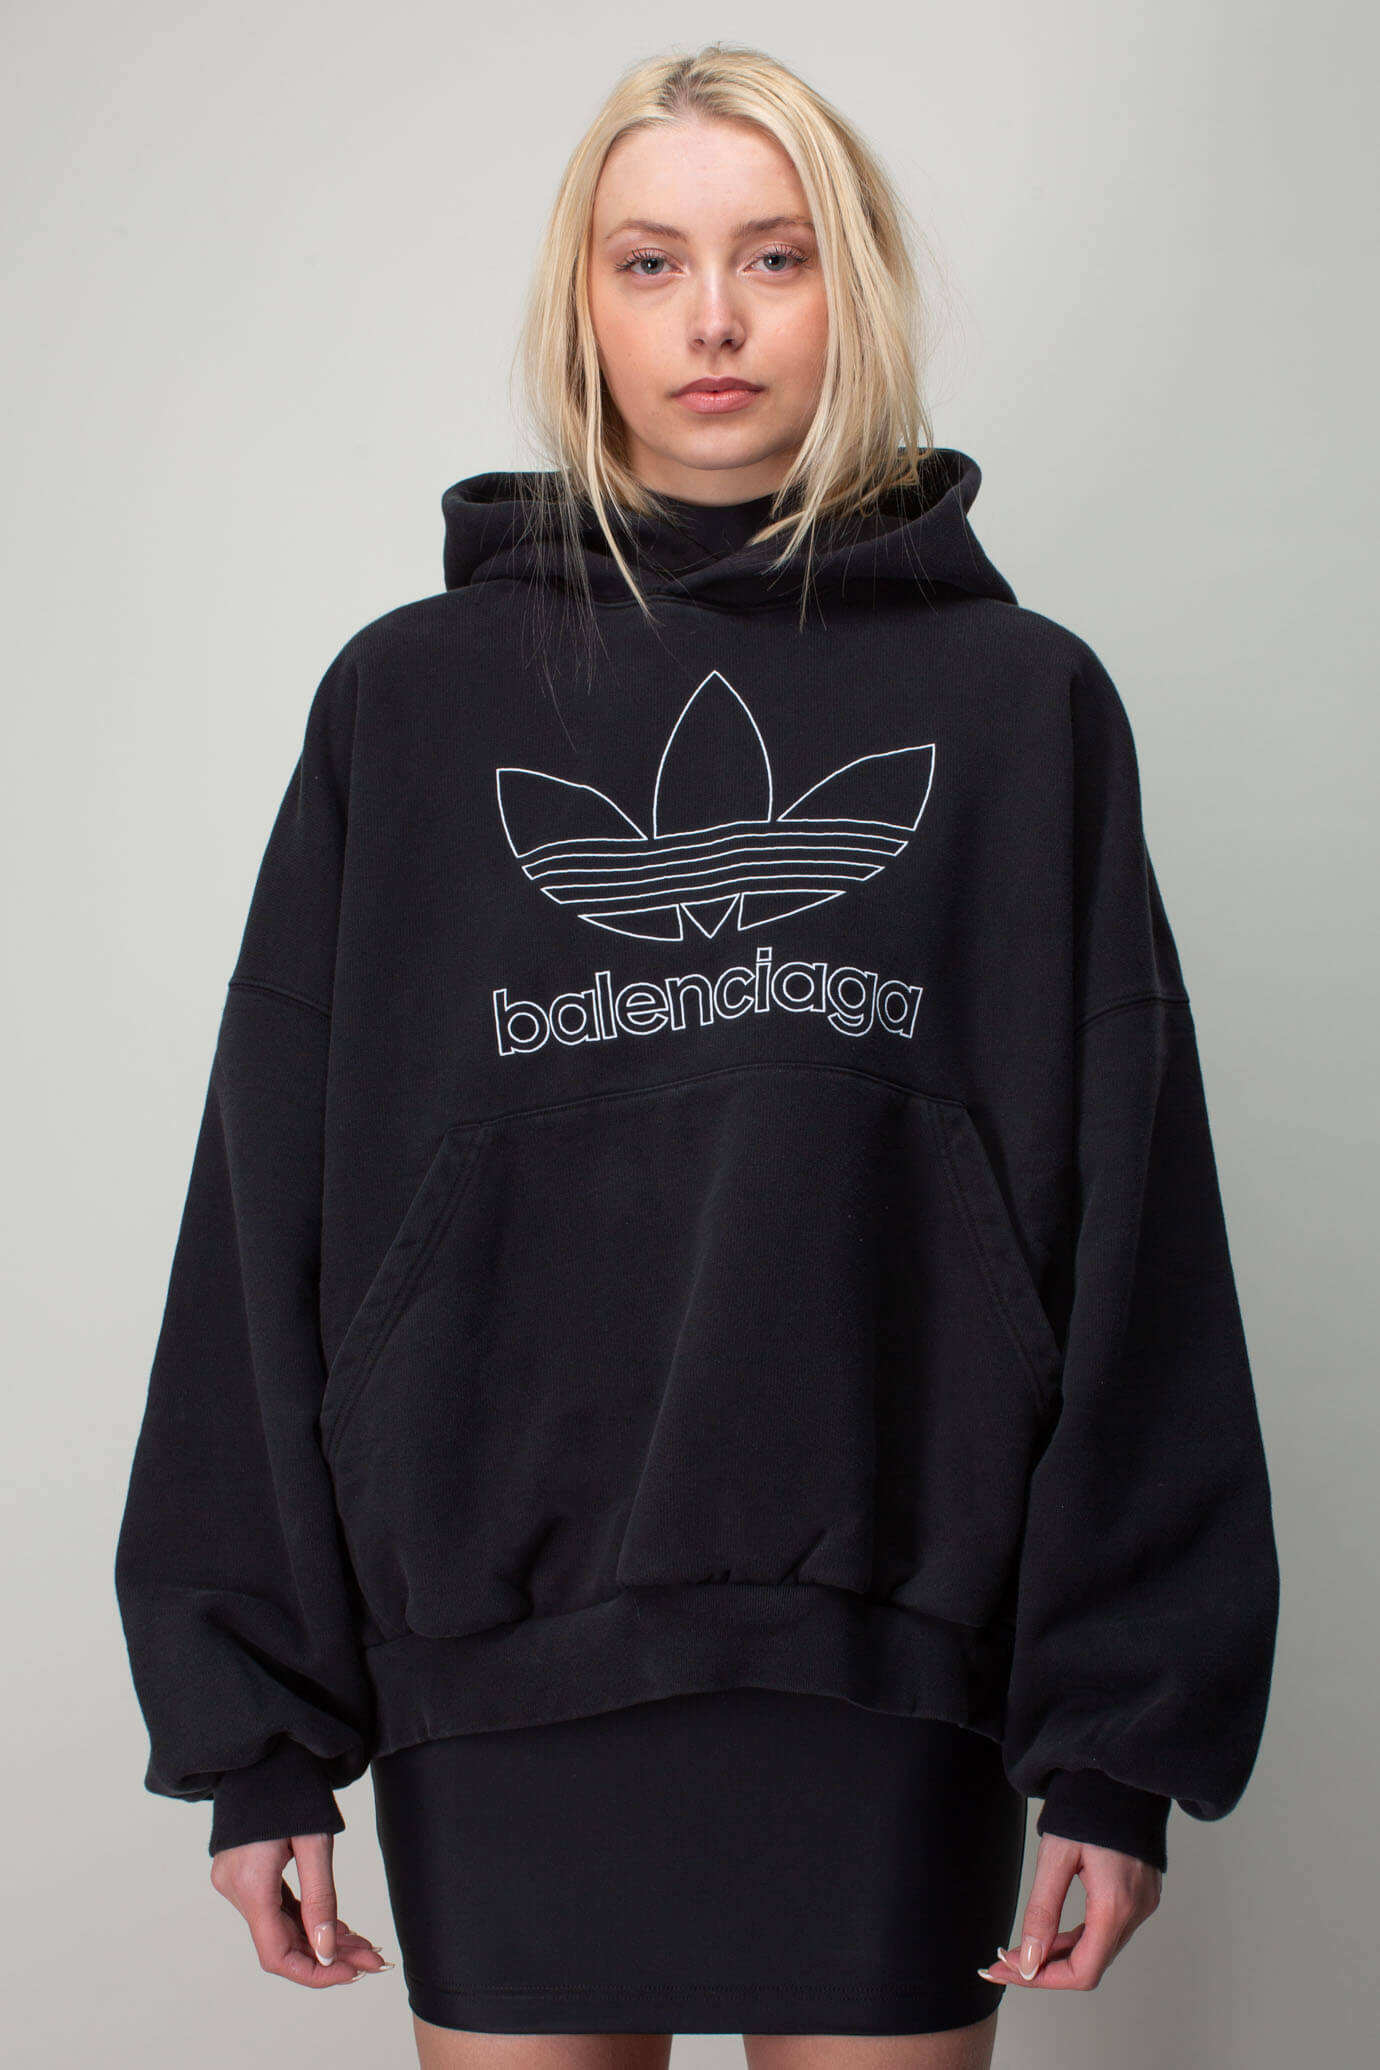 Balenciaga / Adidas Hoodie – LABELS